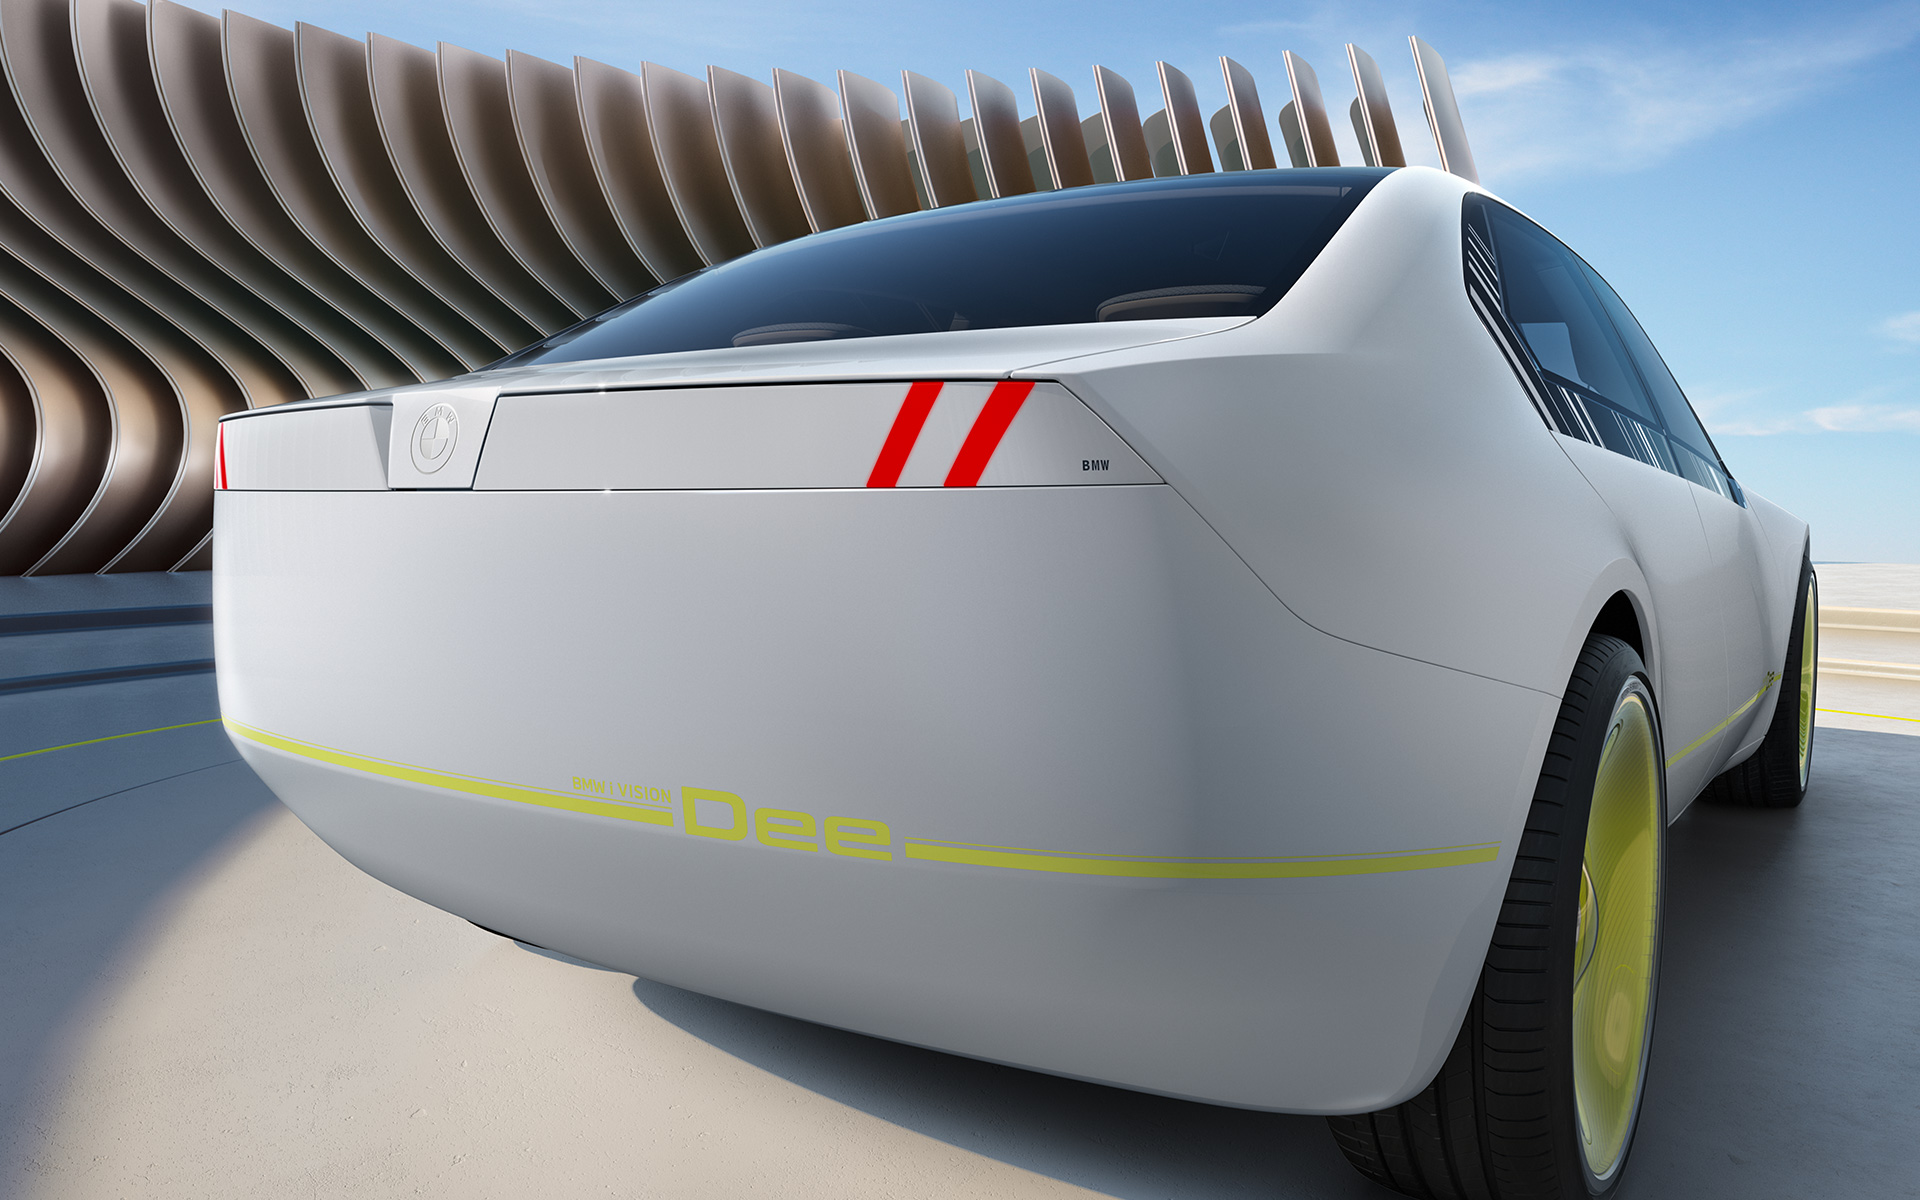 BMWのVision Neue Klasse EV Conceptが9月2日に将来のラインナップをプレビュー